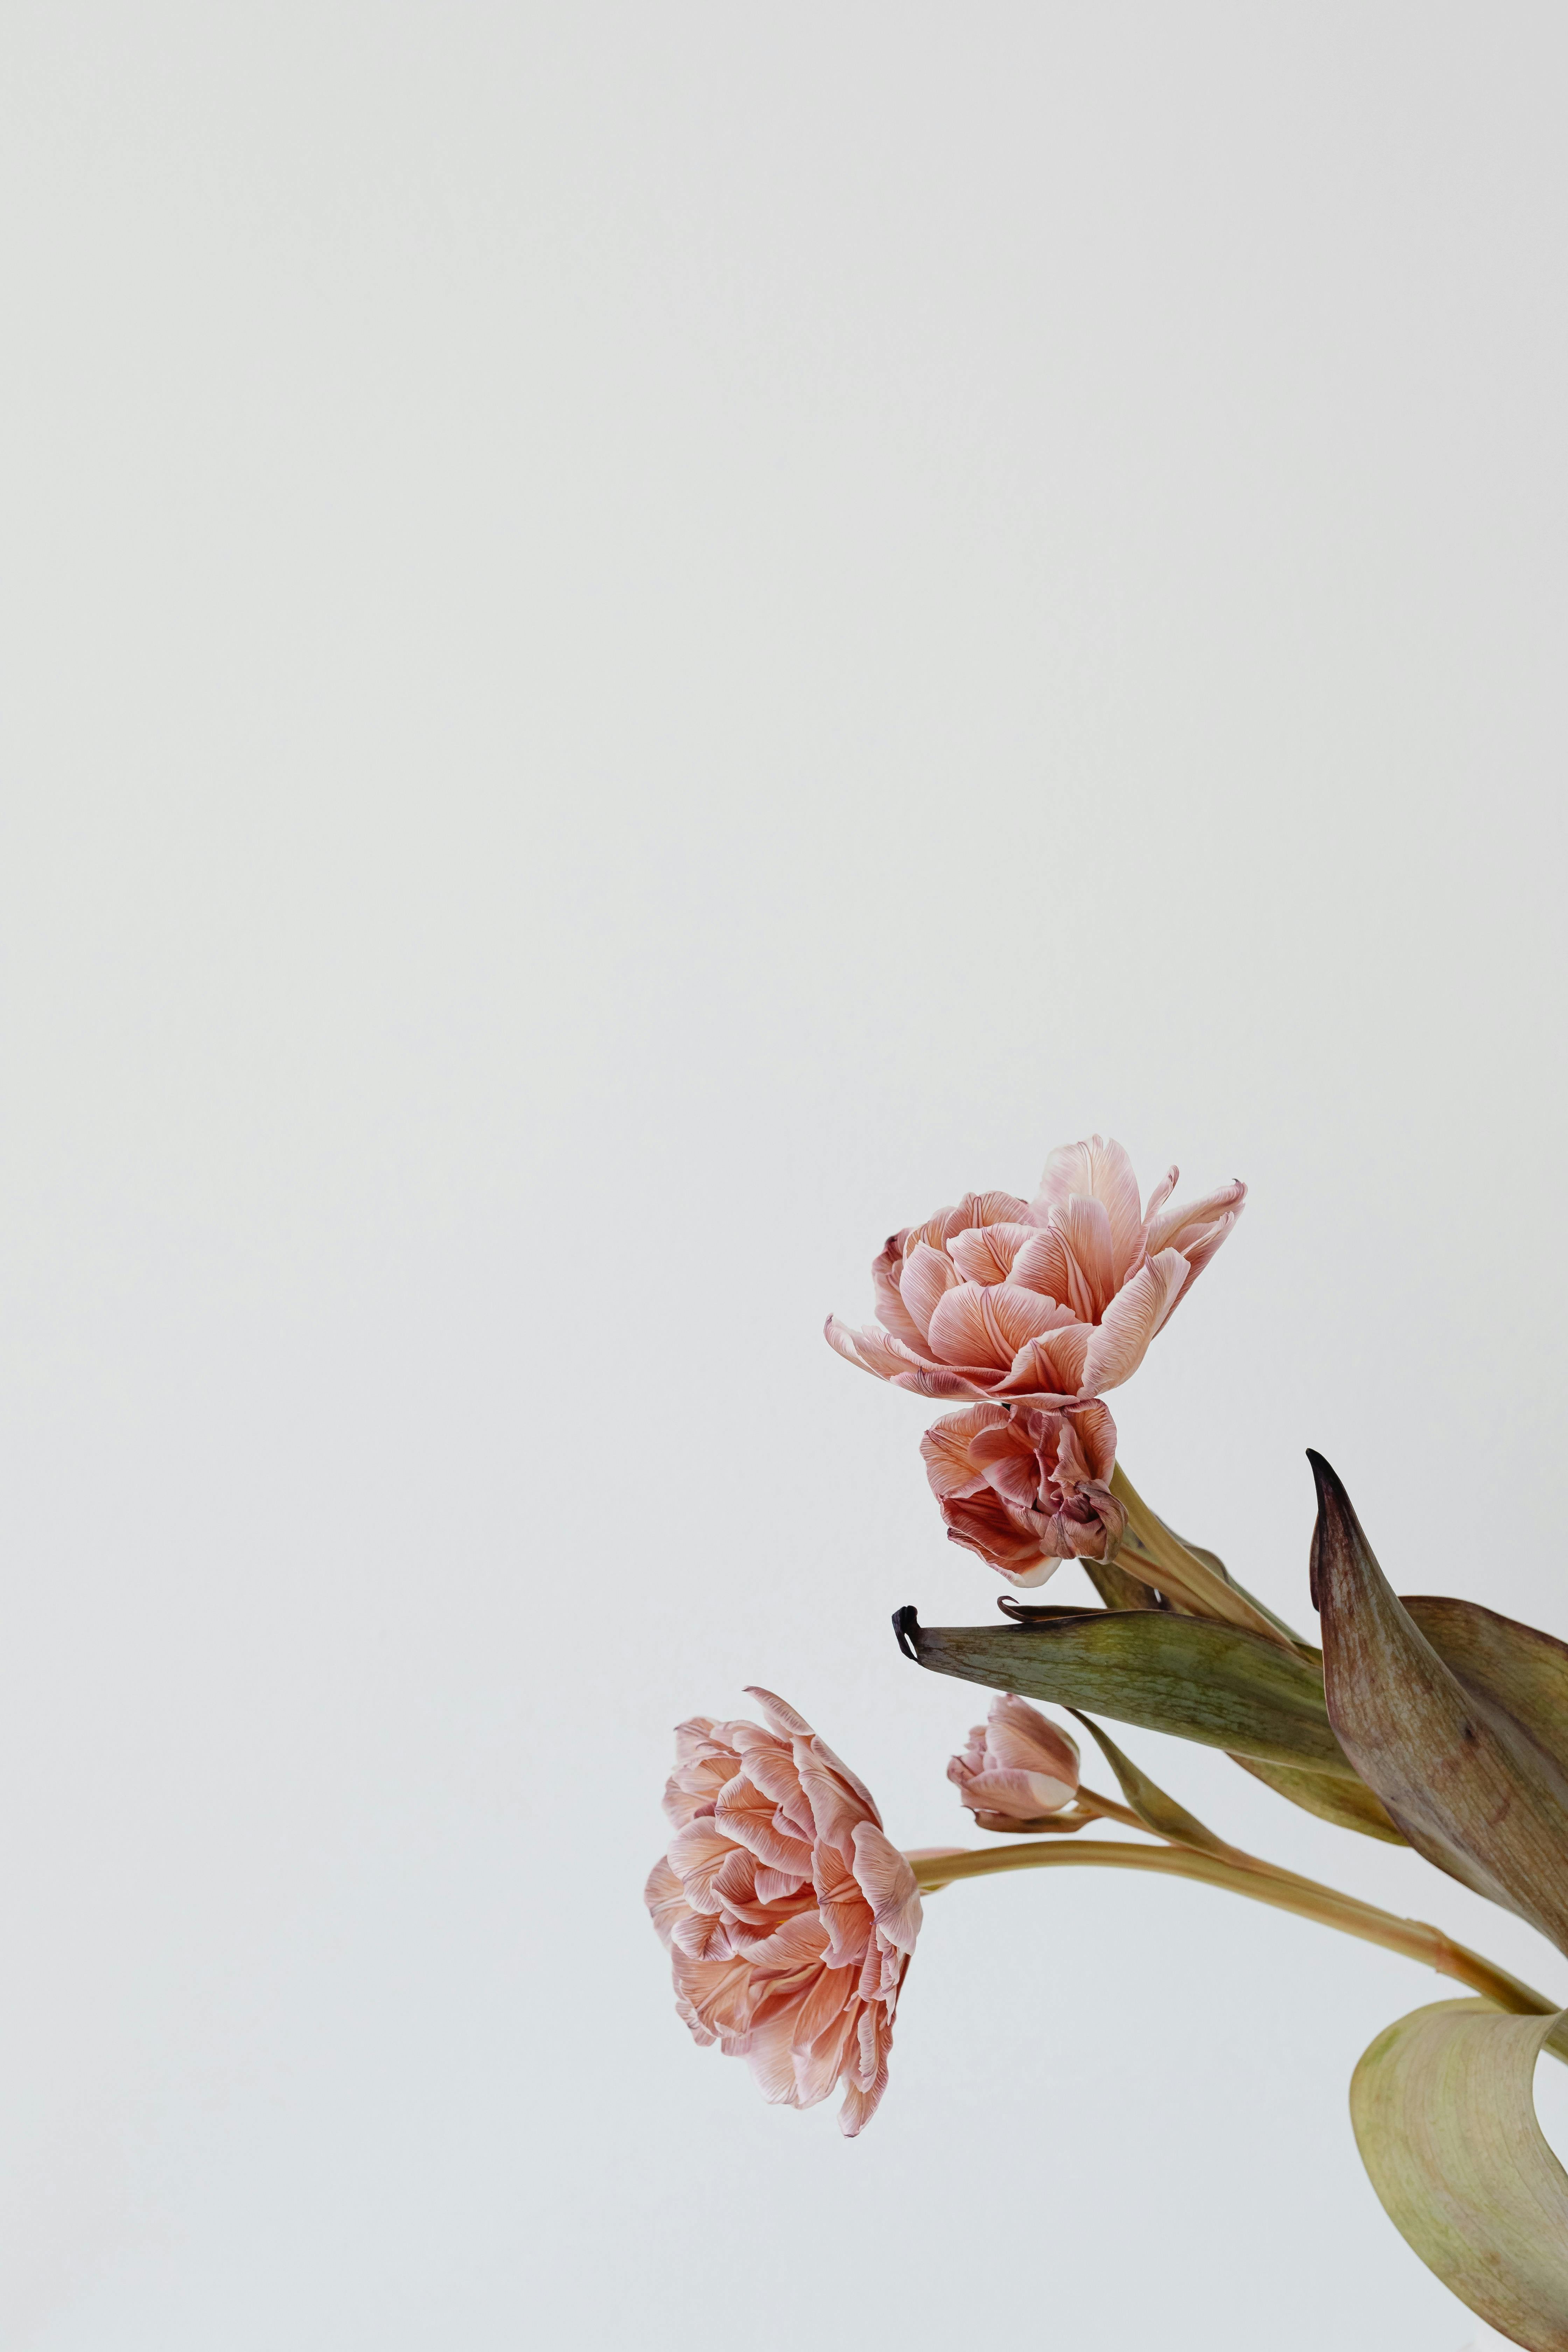 Minimalist Flower Wallpapers  Top Free Minimalist Flower Backgrounds   WallpaperAccess